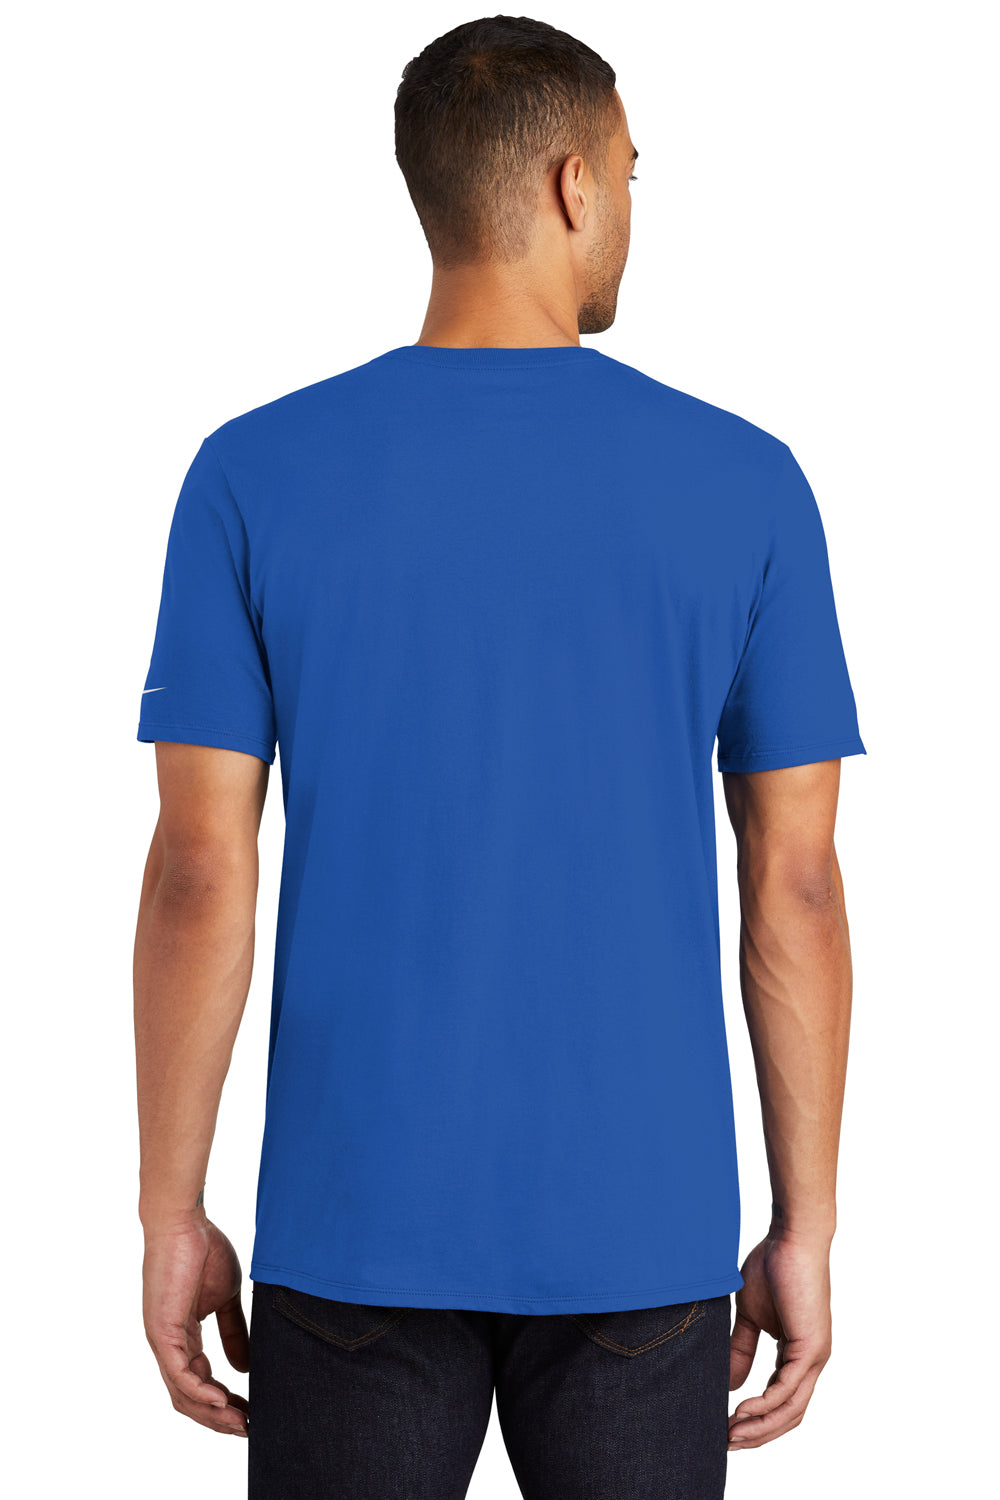 Nike NKBQ5233 Mens Core Short Sleeve Crewneck T-Shirt Rush Blue Back